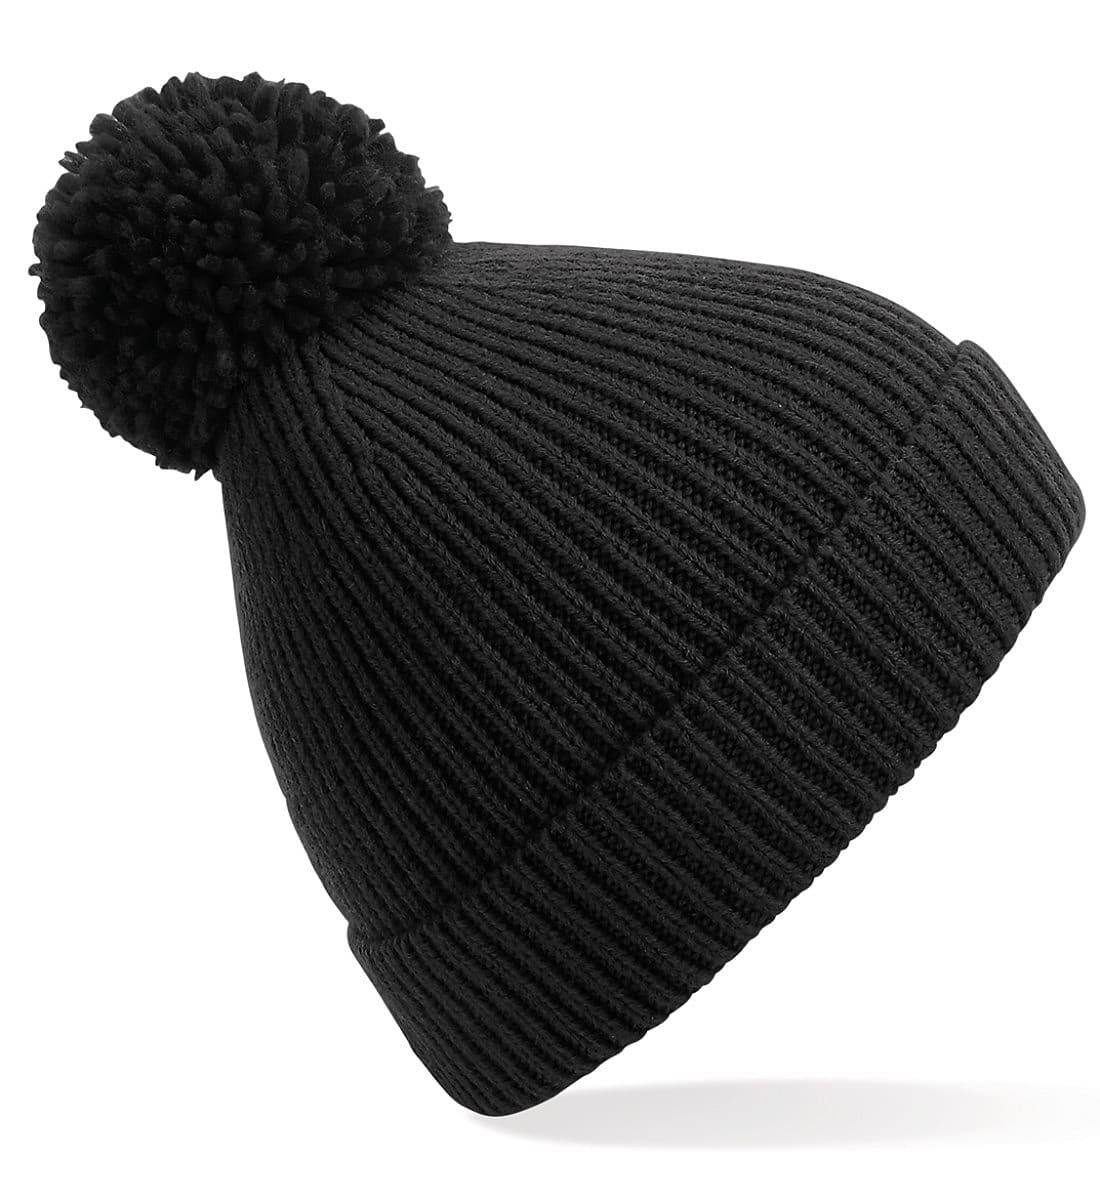 Beechfield Knit Ribbed Pom Pom Beanie Hat in Black (Product Code: B382)